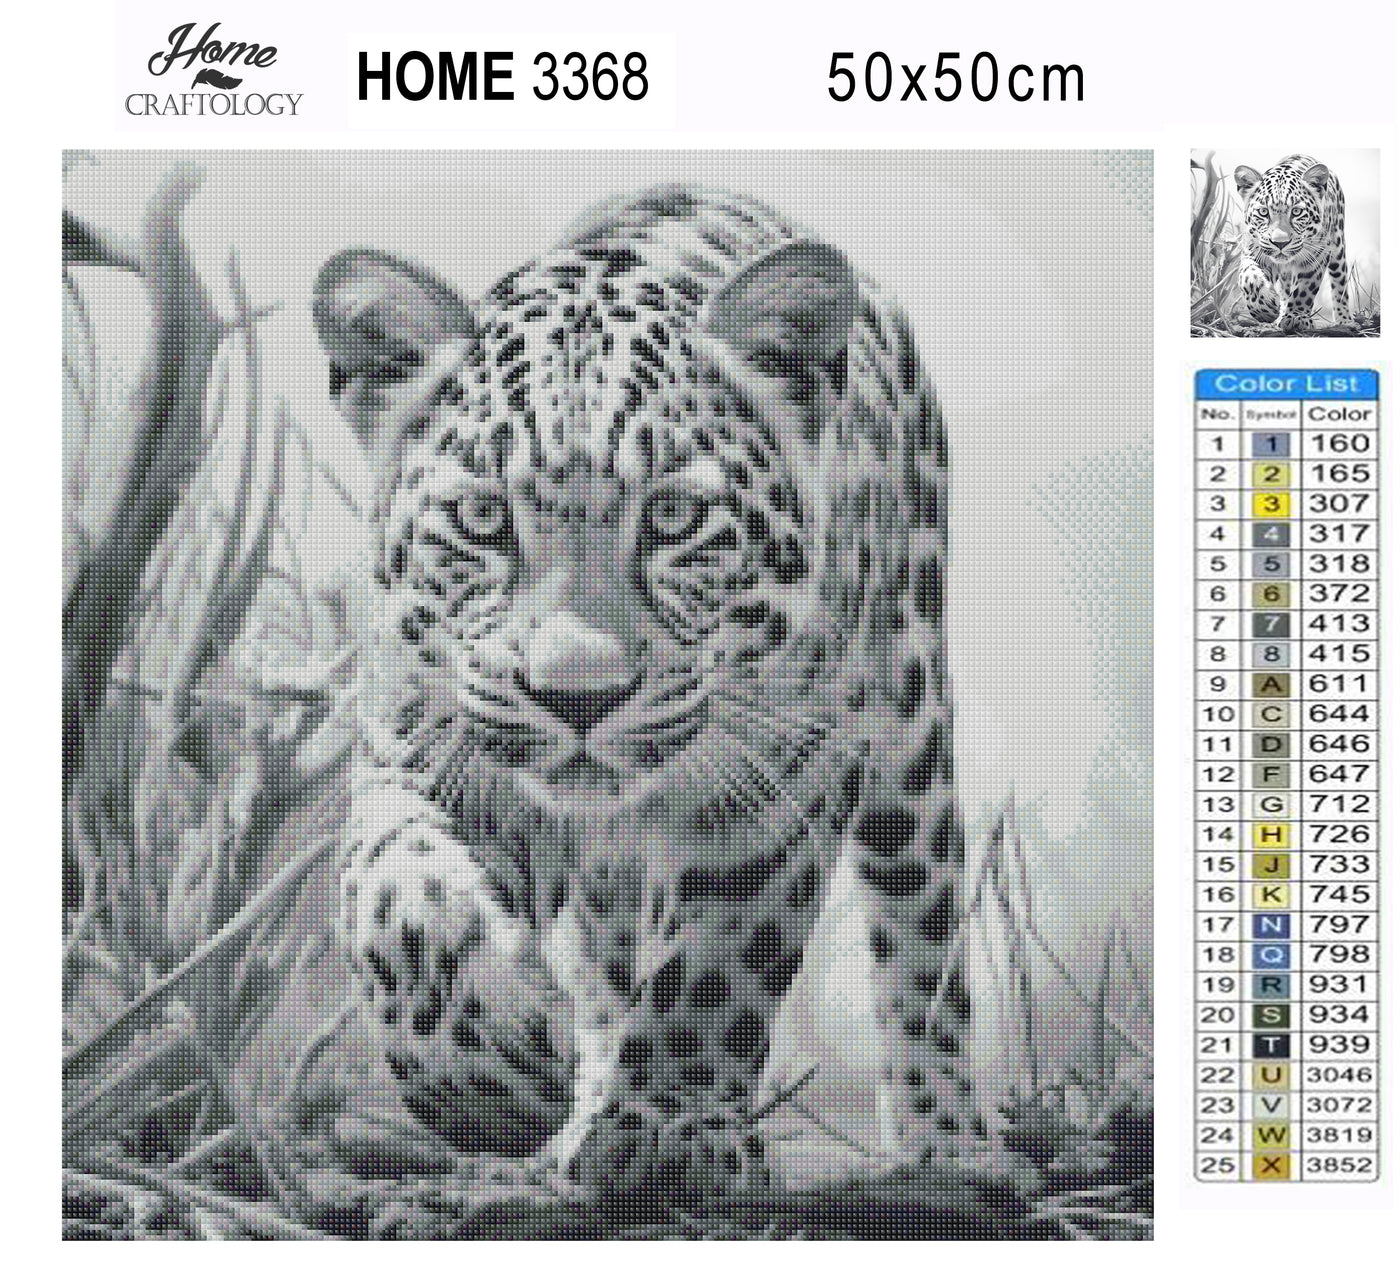 Black and White Leopard - Premium Diamond Painting Kit